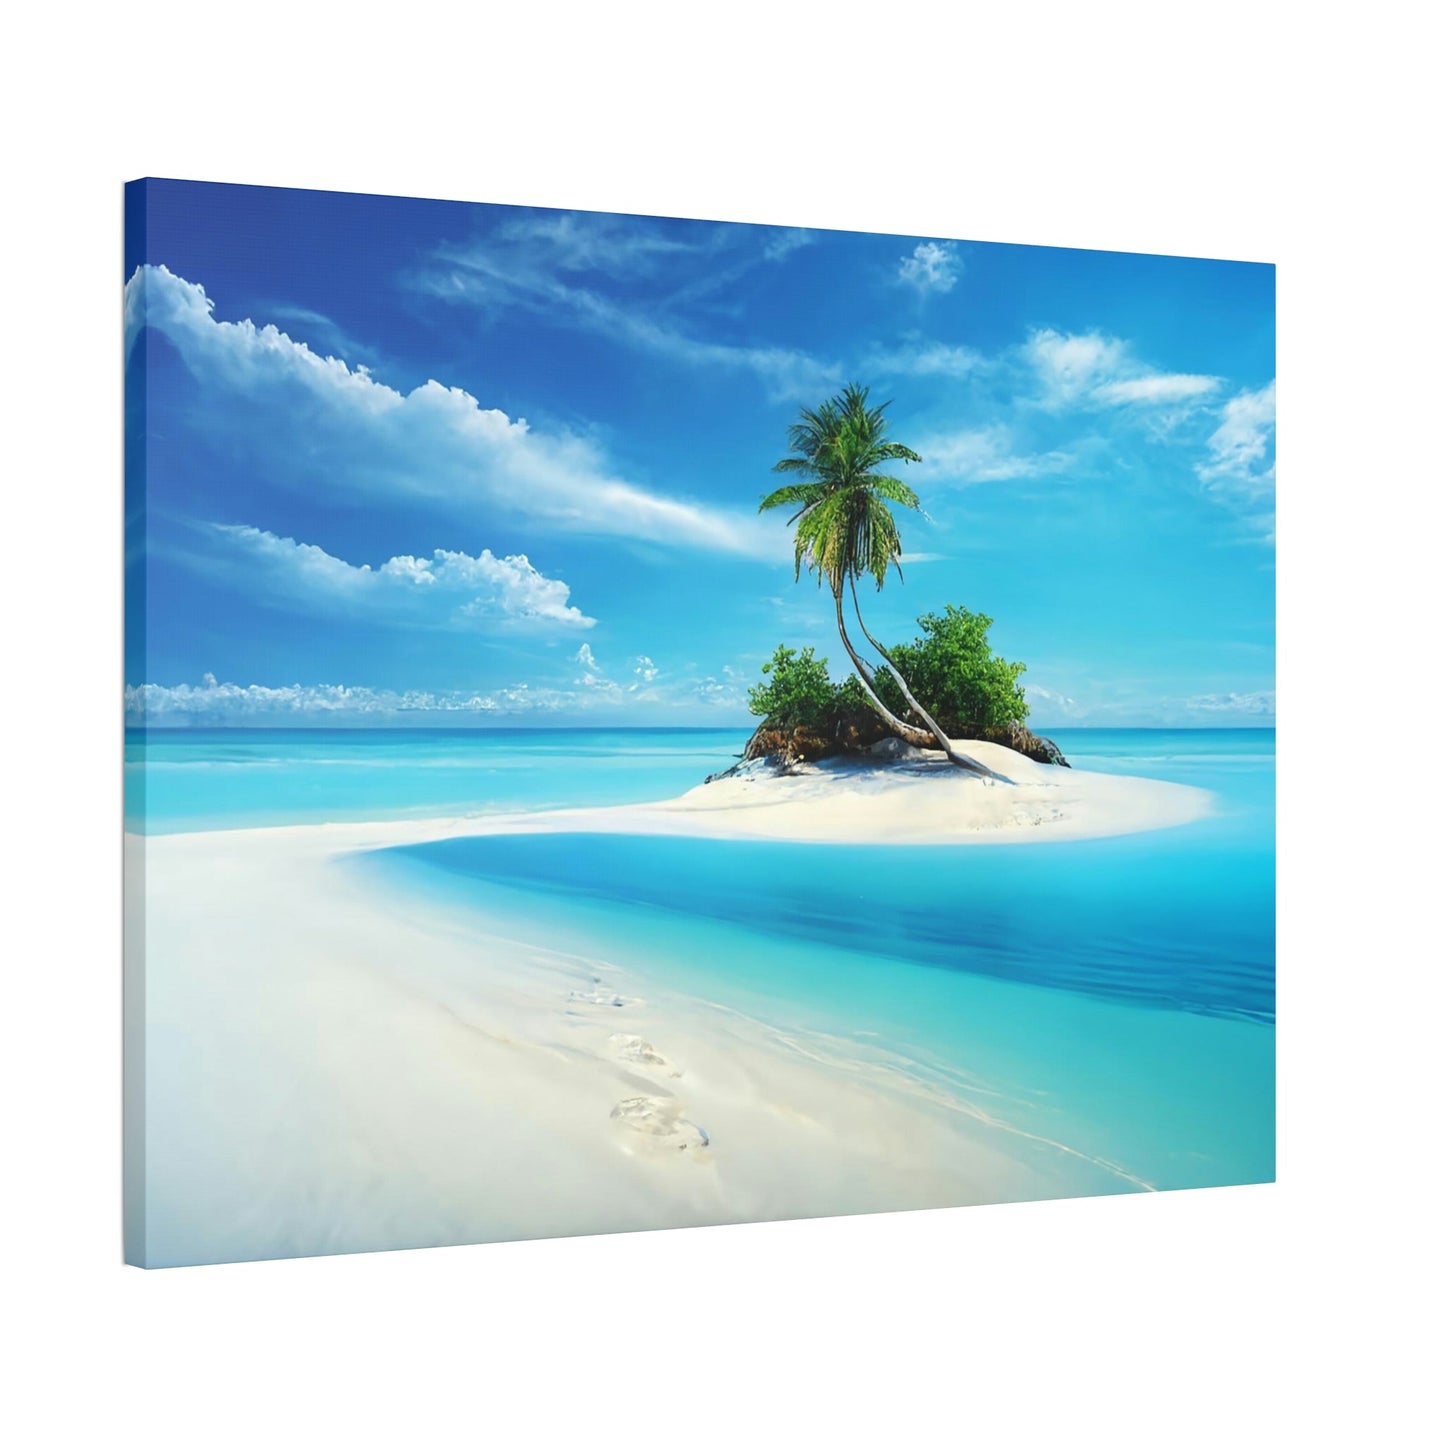 Tranquil Tropics: Canvas & Poster Art of a Serene Island Beach Scene